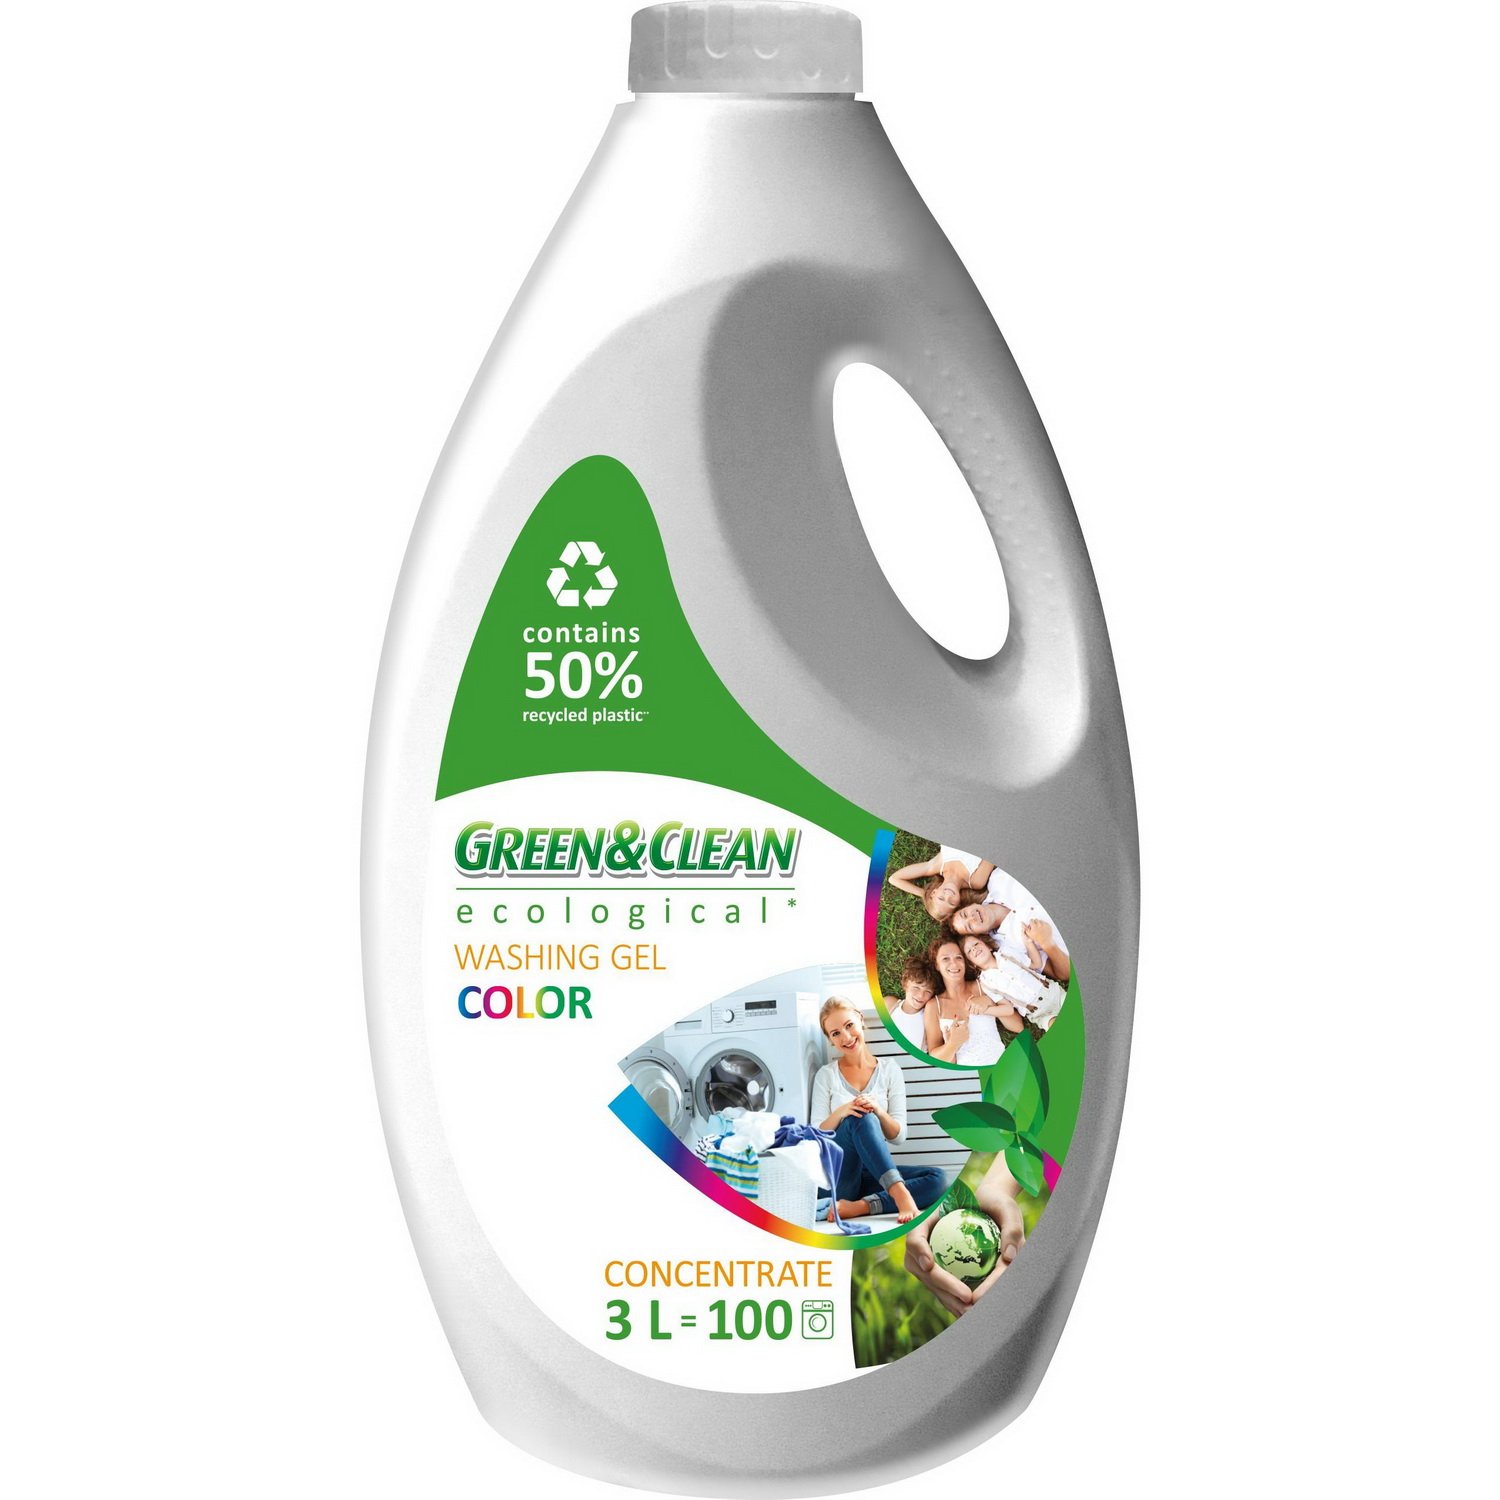 Гель для прання кольорового одягу Green & Clean Professional Color, концентрат, 3 л - фото 1